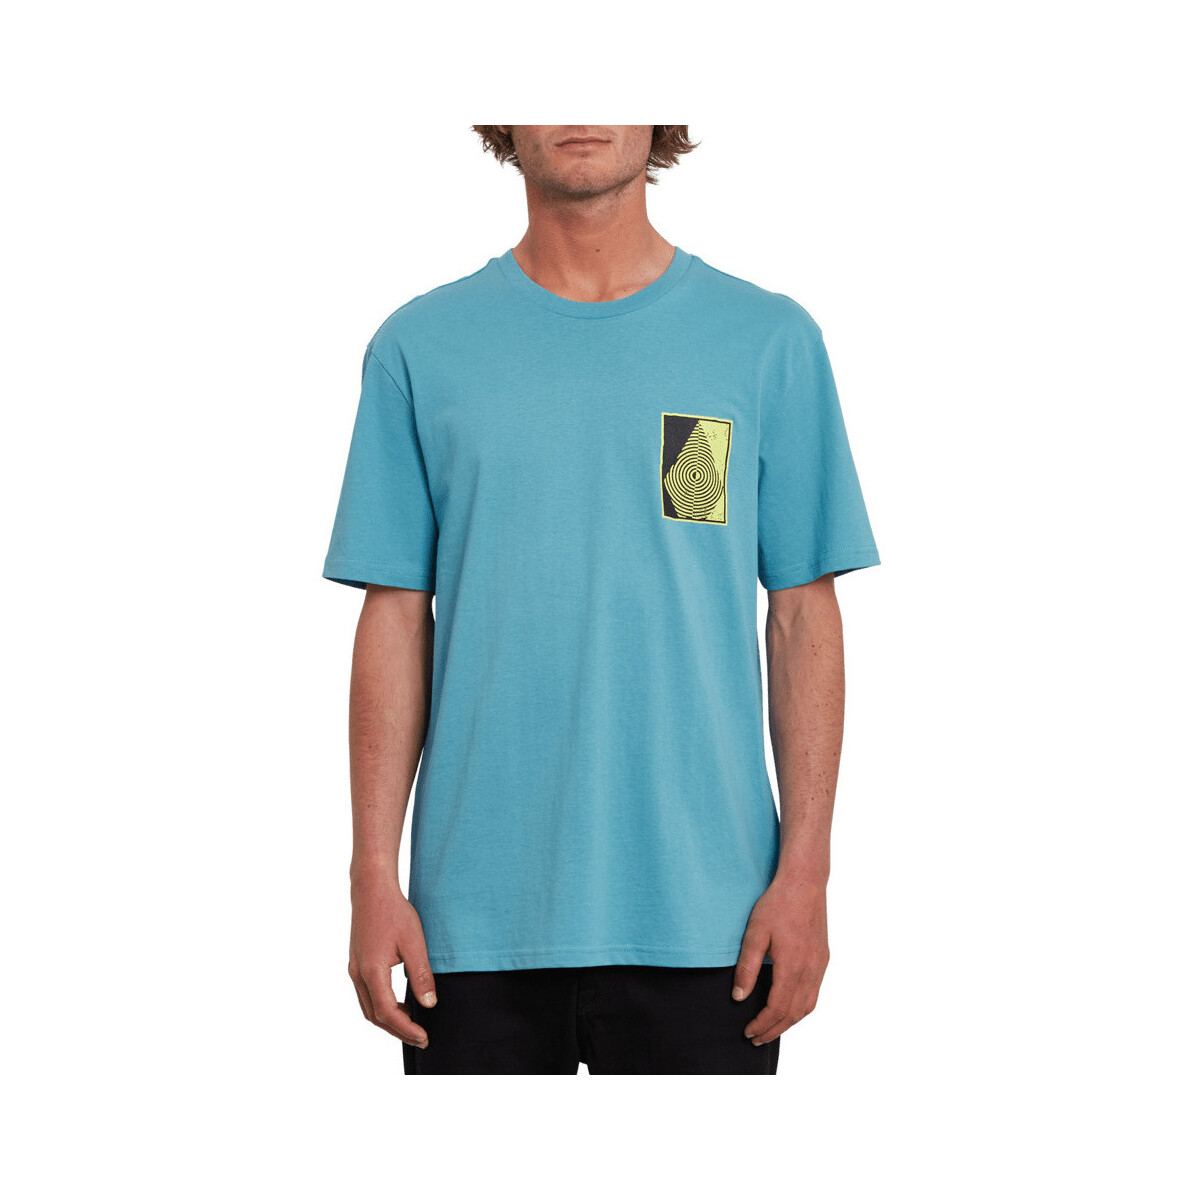 Vêtements Homme T-shirts manches courtes Volcom Poster Bsc Ss Niagara Bleu